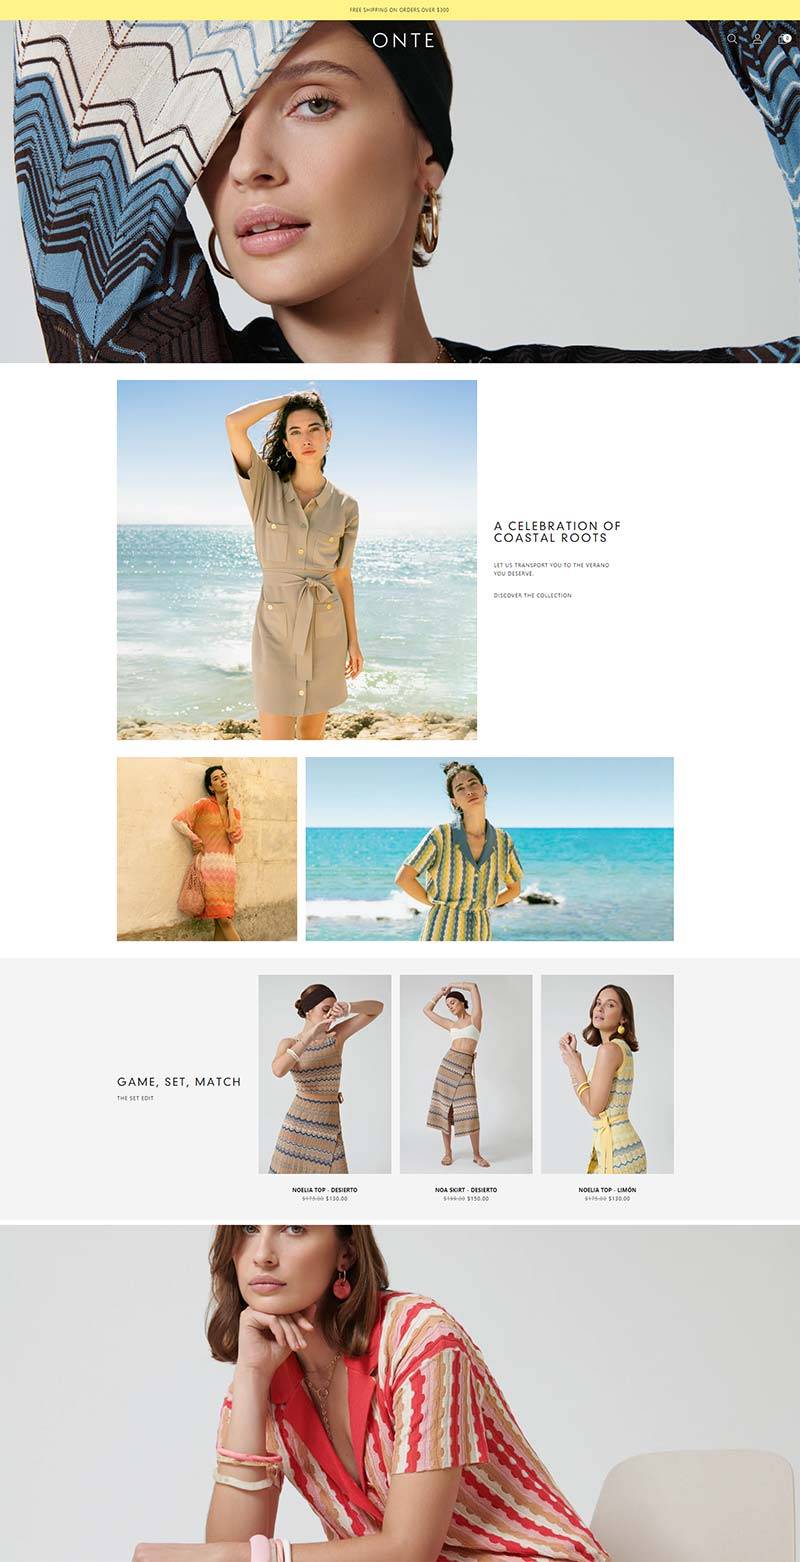 ONTE 澳大利亚高端女性时装品牌购物网站